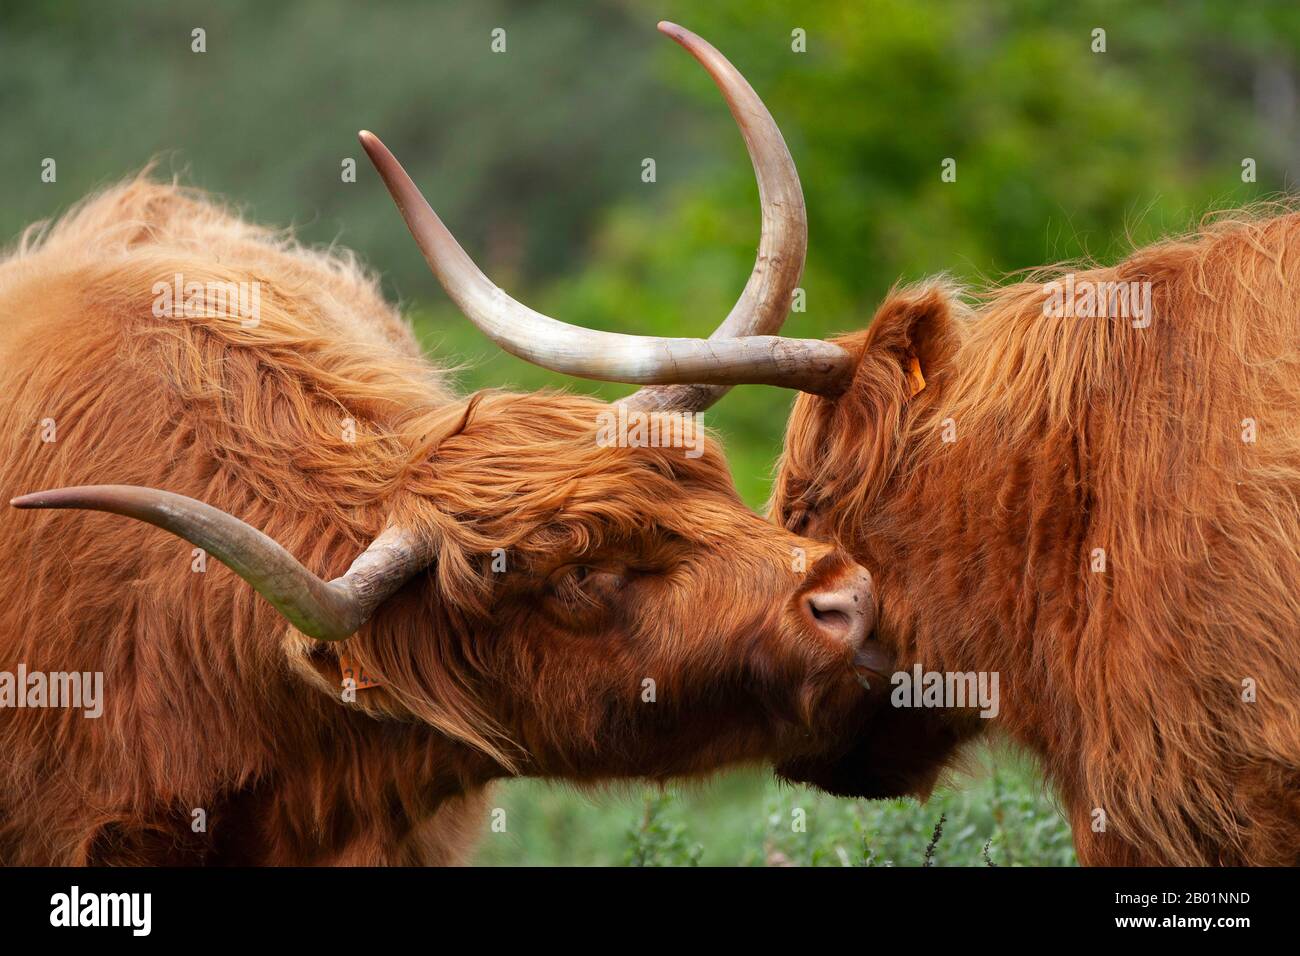 Scottish Highland Cattle, Kyloe, Highland cow, Heelan coo (Bos primigenius f. taurus), two Scottish Highland Cattles greeting, Belgium, West Flanders, De Westhoek, De Panne Stock Photo